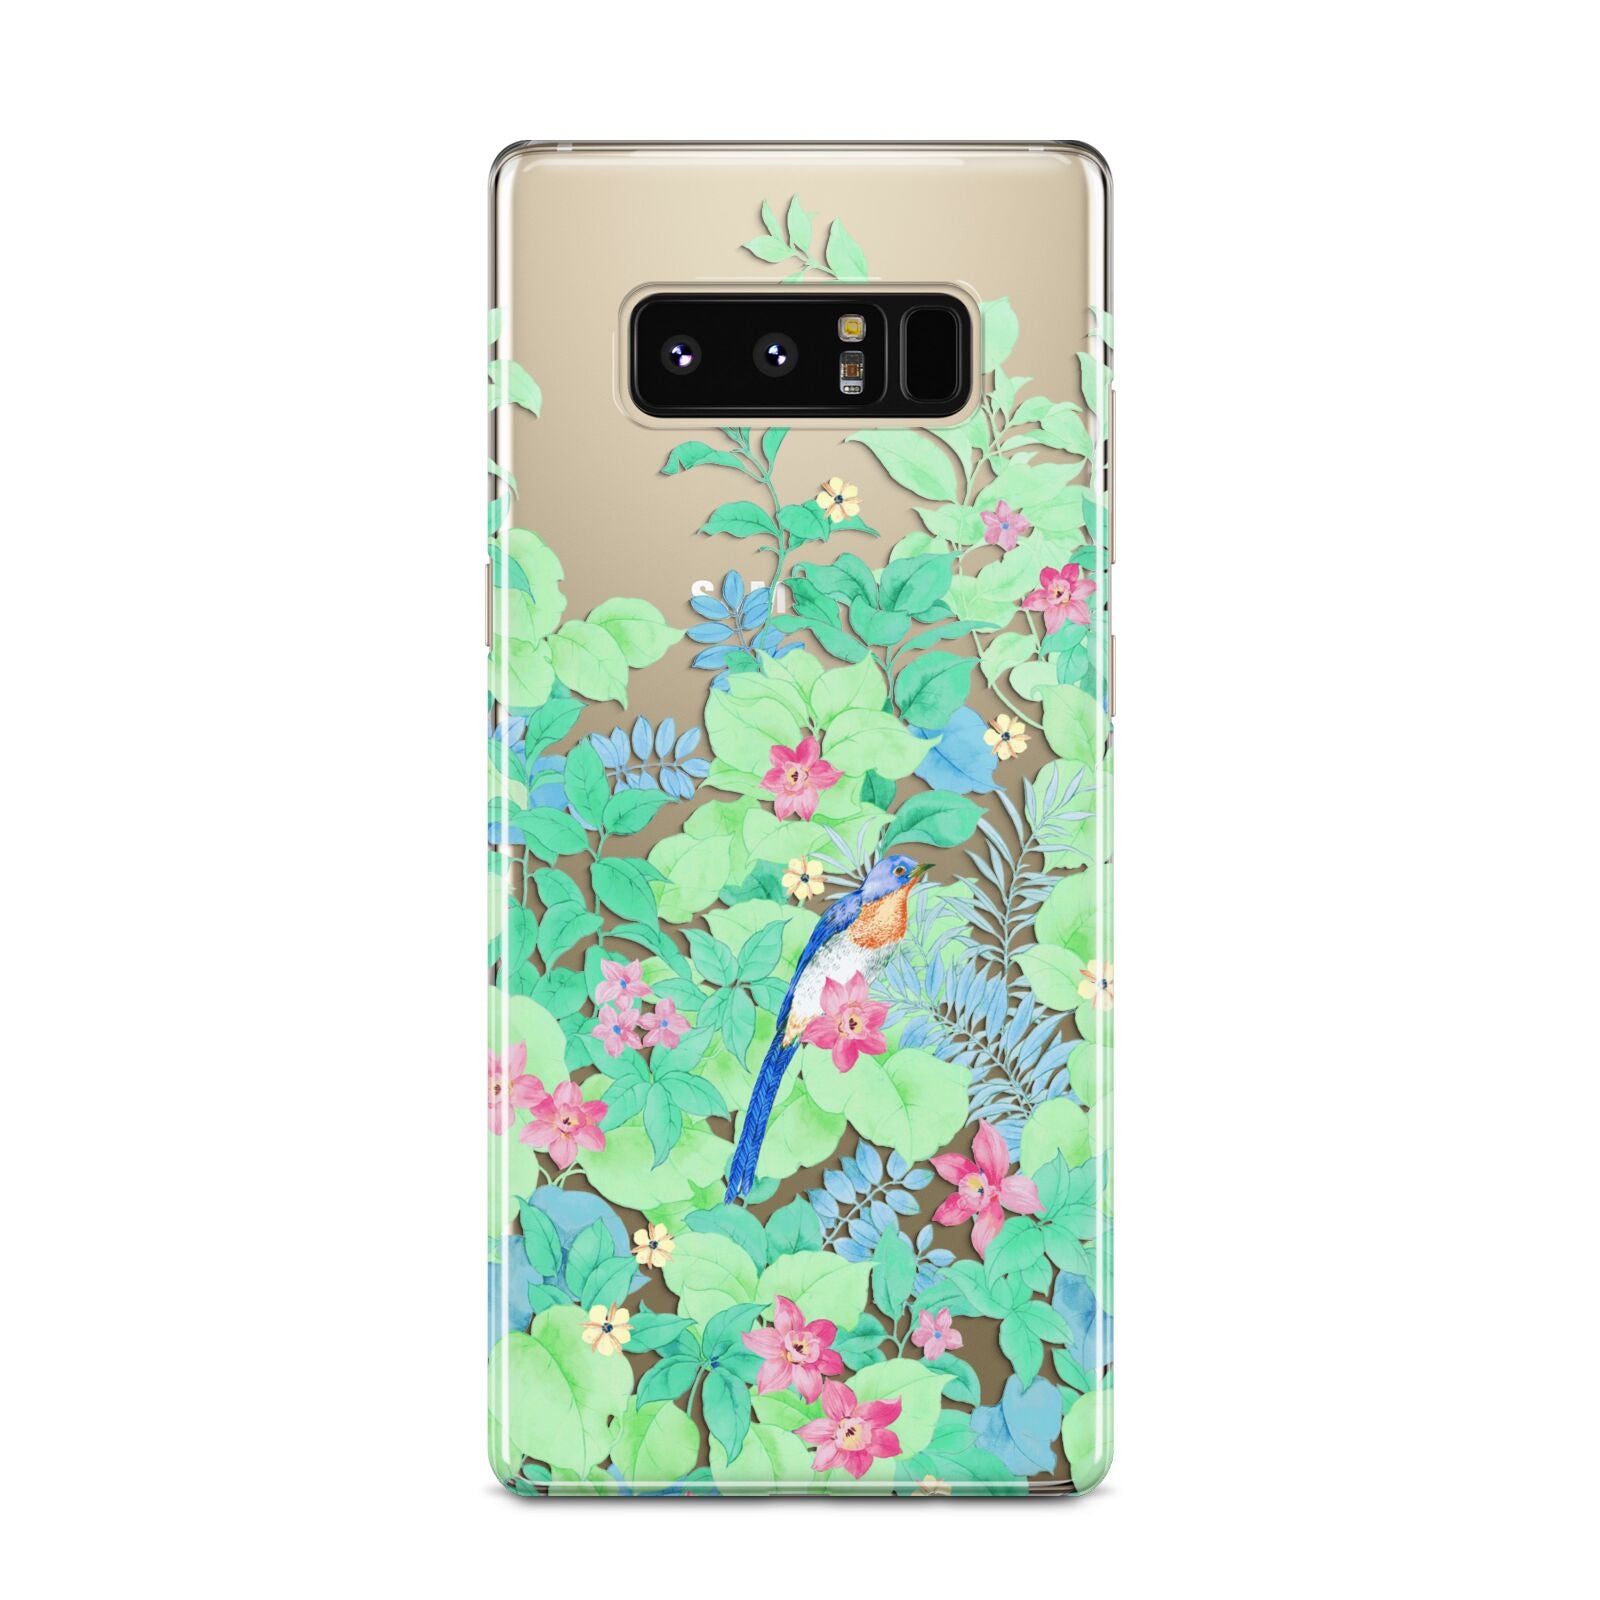 Watercolour Floral Samsung Galaxy Note 8 Case